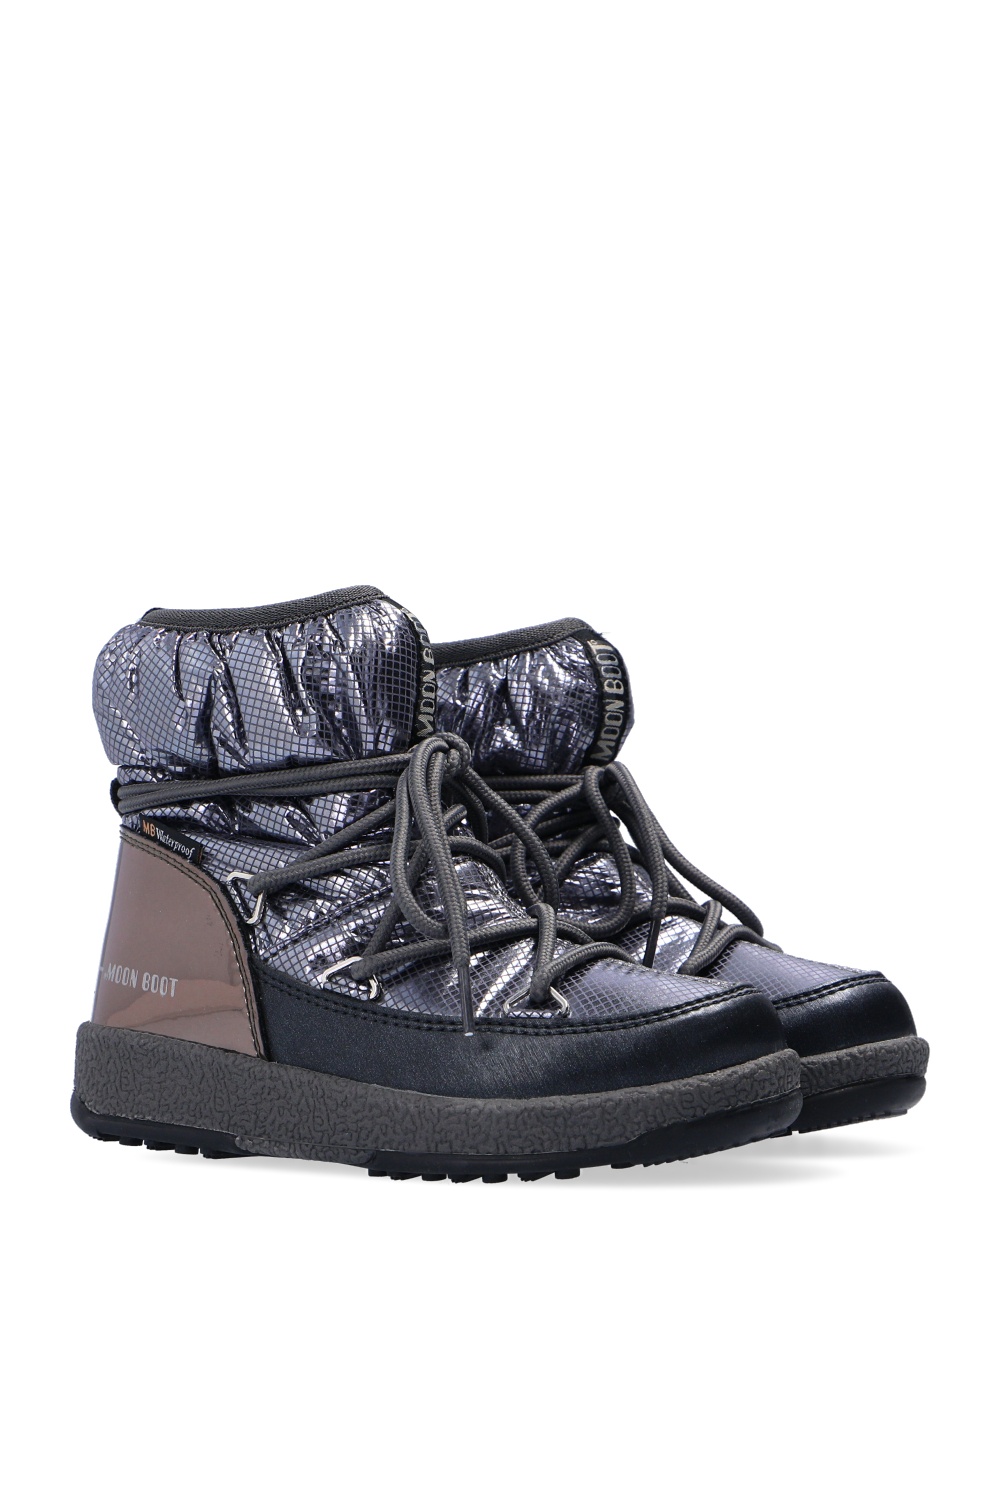 Unicorn Jelly Mini sandals ‘Nylon Low Premium’ snow boots